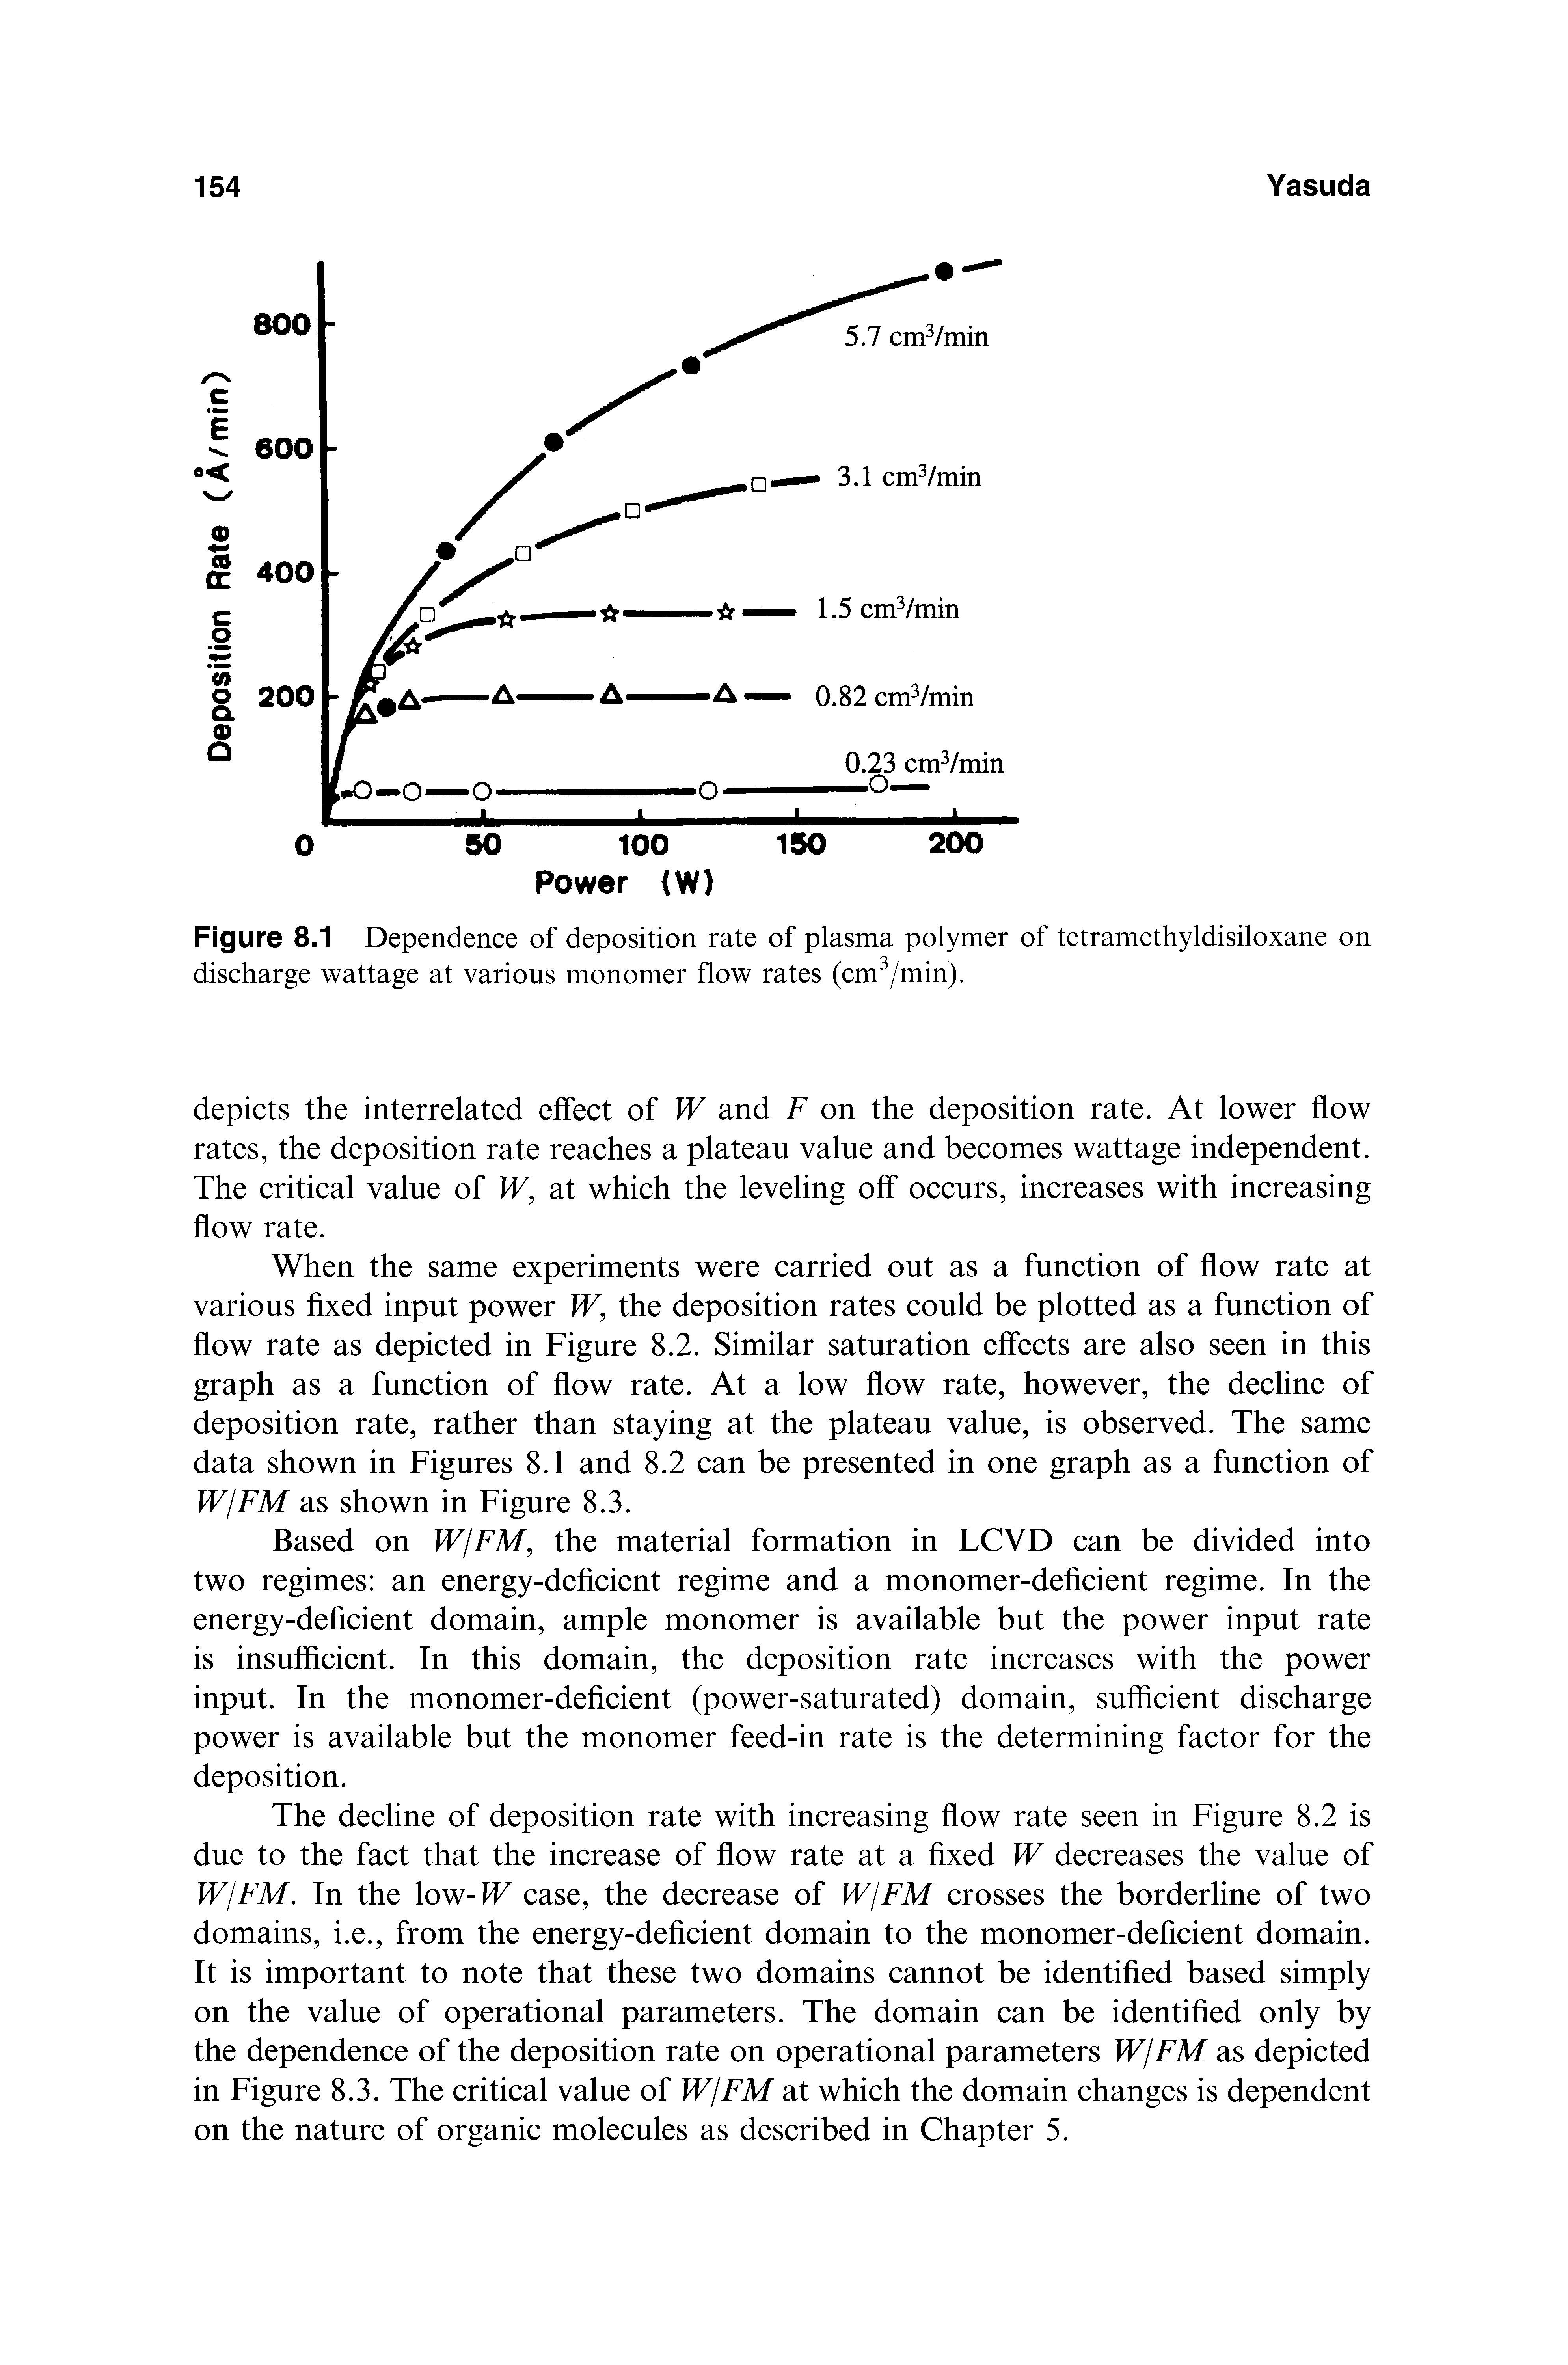 Figure 8.1 Dependence of deposition rate of plasma polymer of tetramethyldisiloxane on discharge wattage at various monomer flow rates (cm /min).